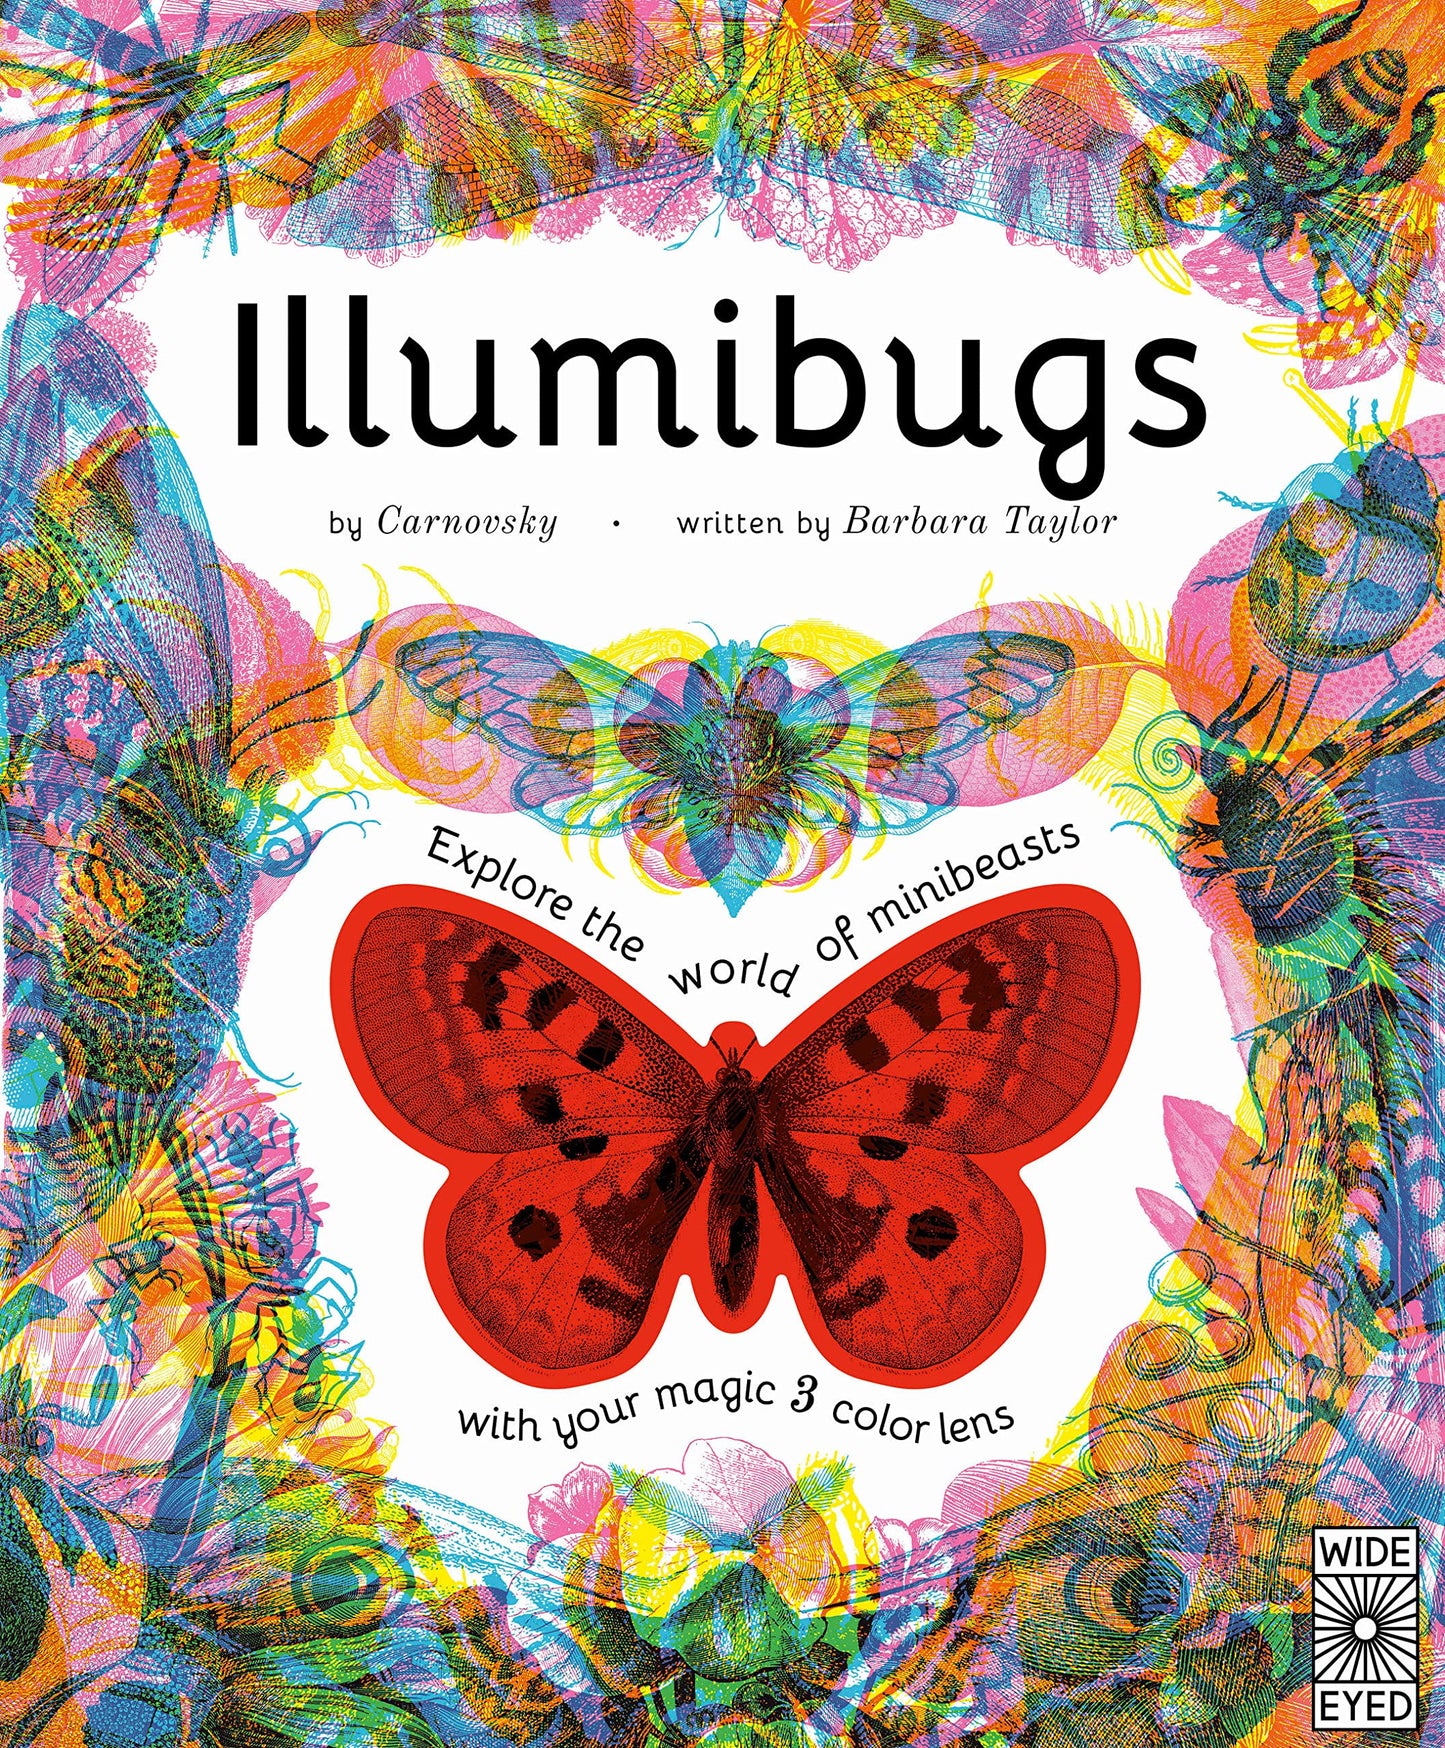 Illumibugs: Explore the world of mini beasts with your magic 3 color lens